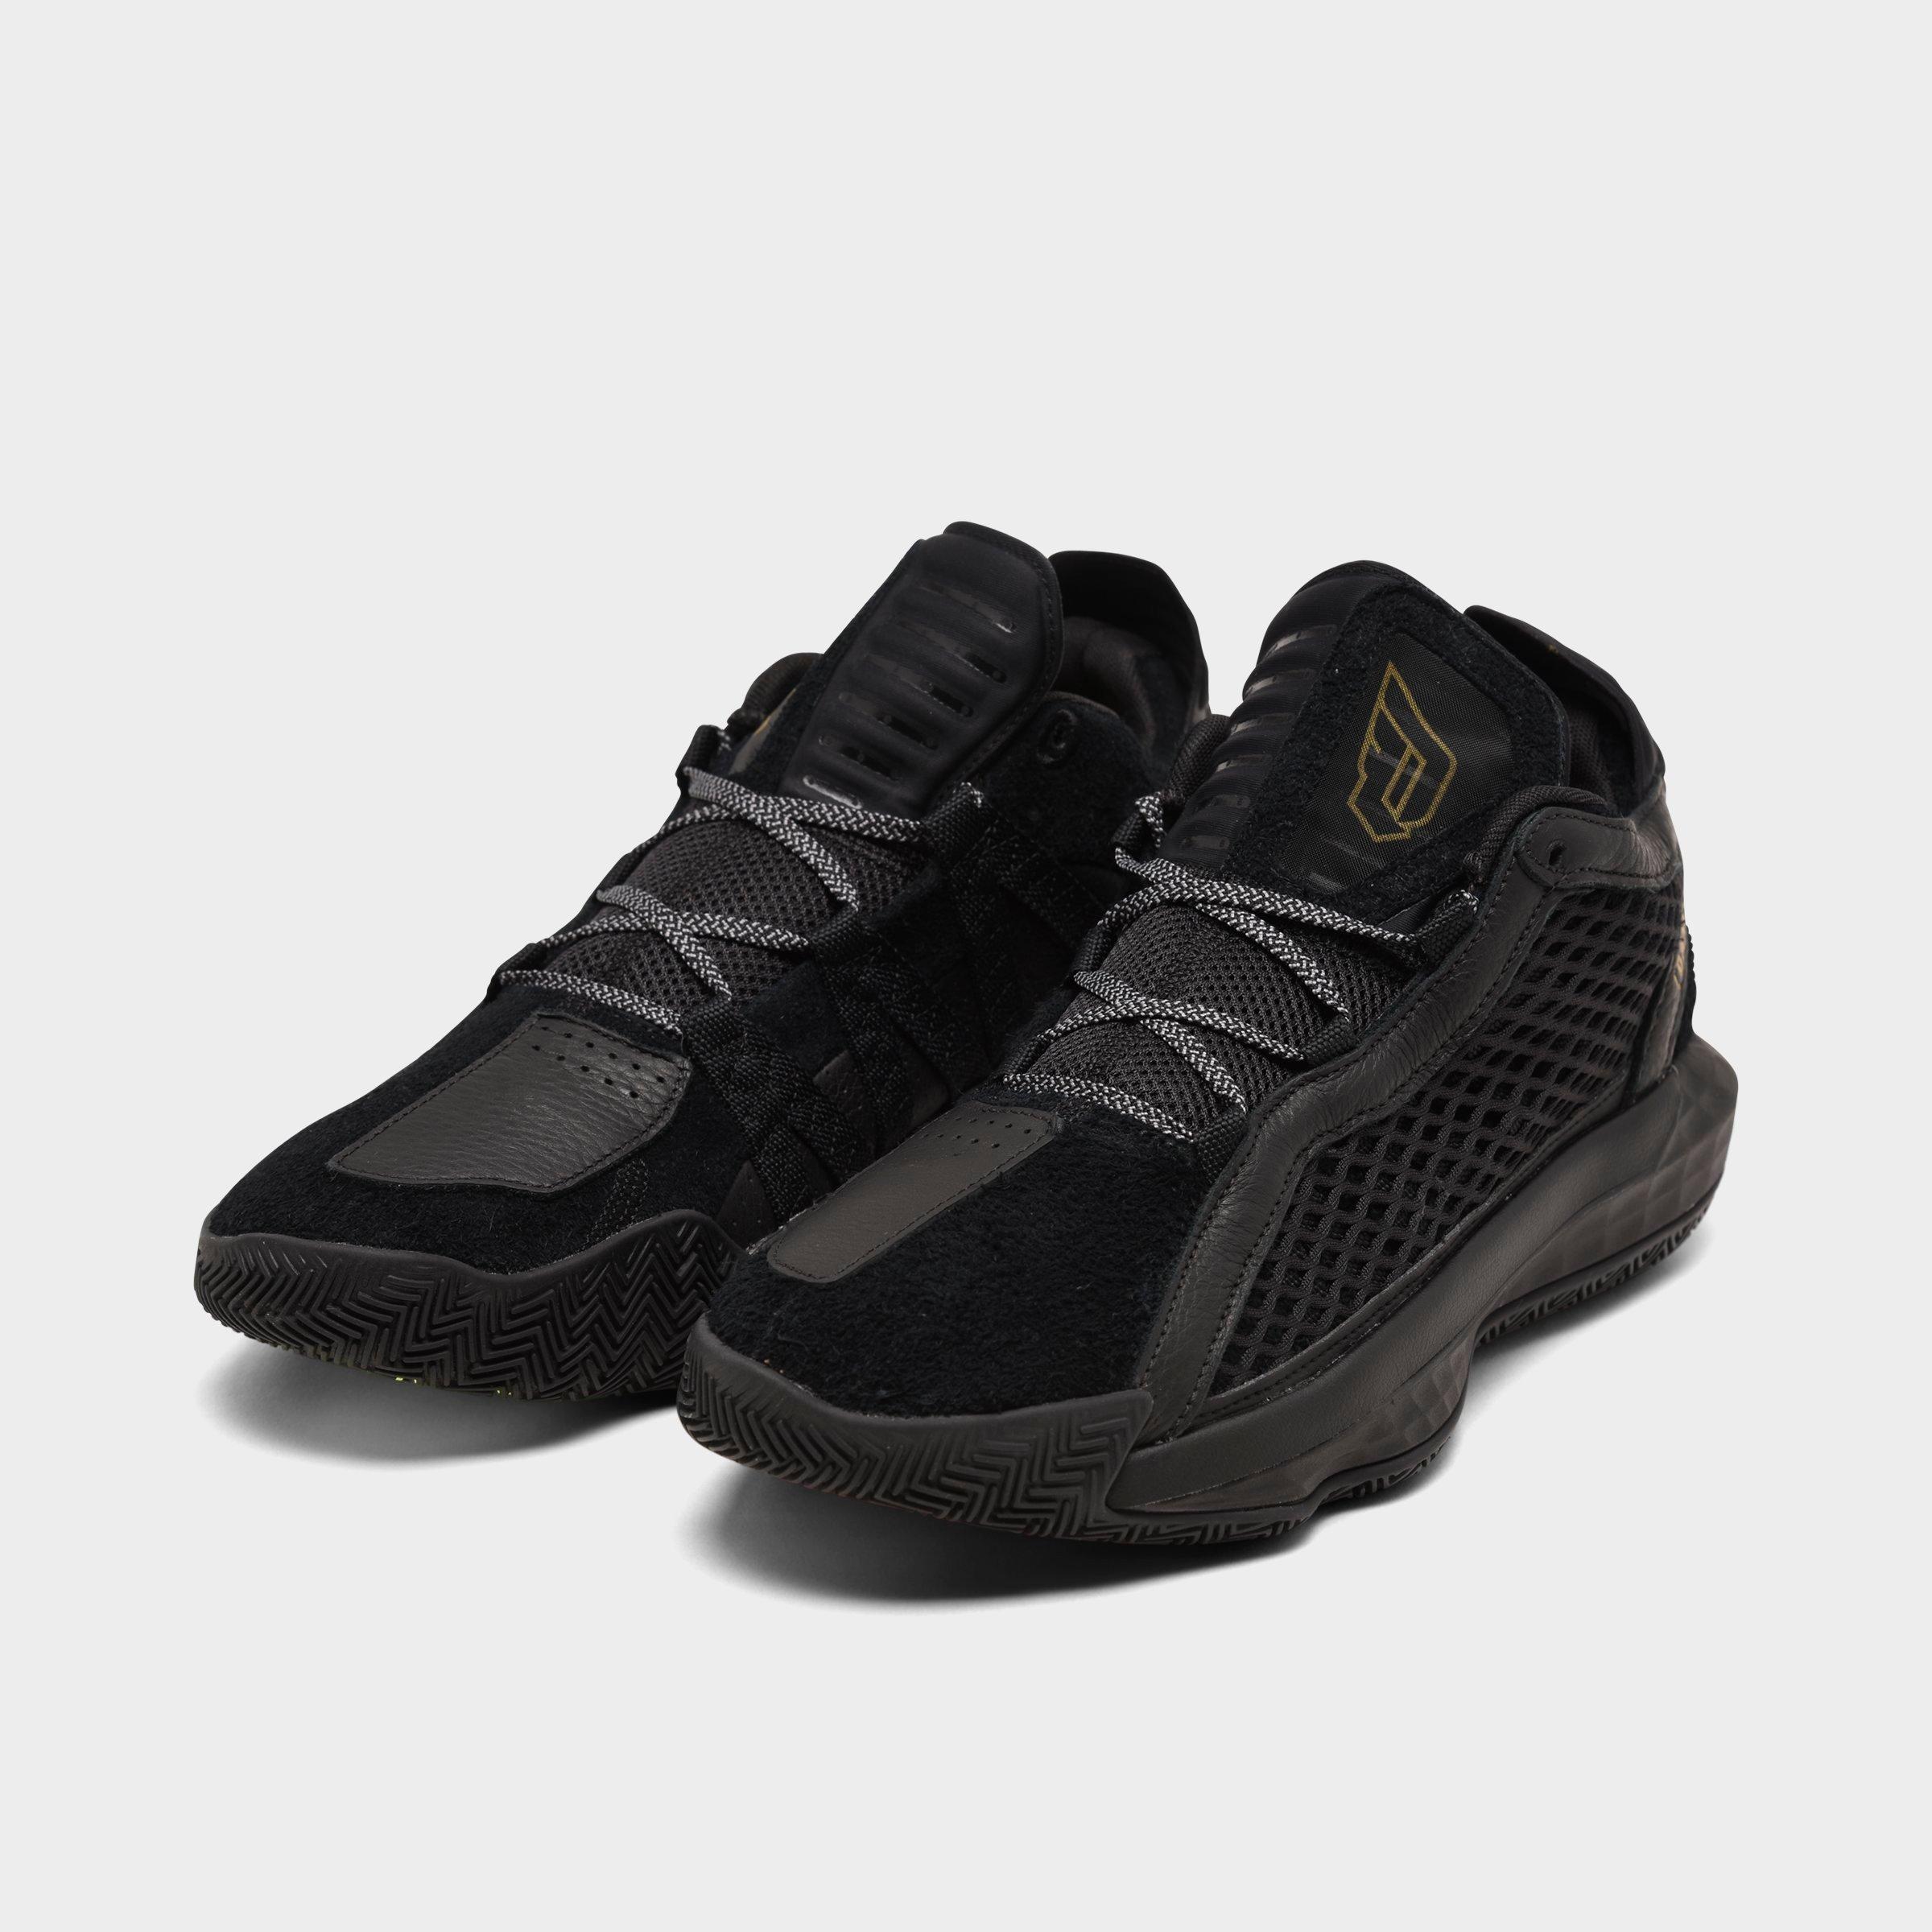 adidas Dame 6 Basketball Shoes| Finish Line